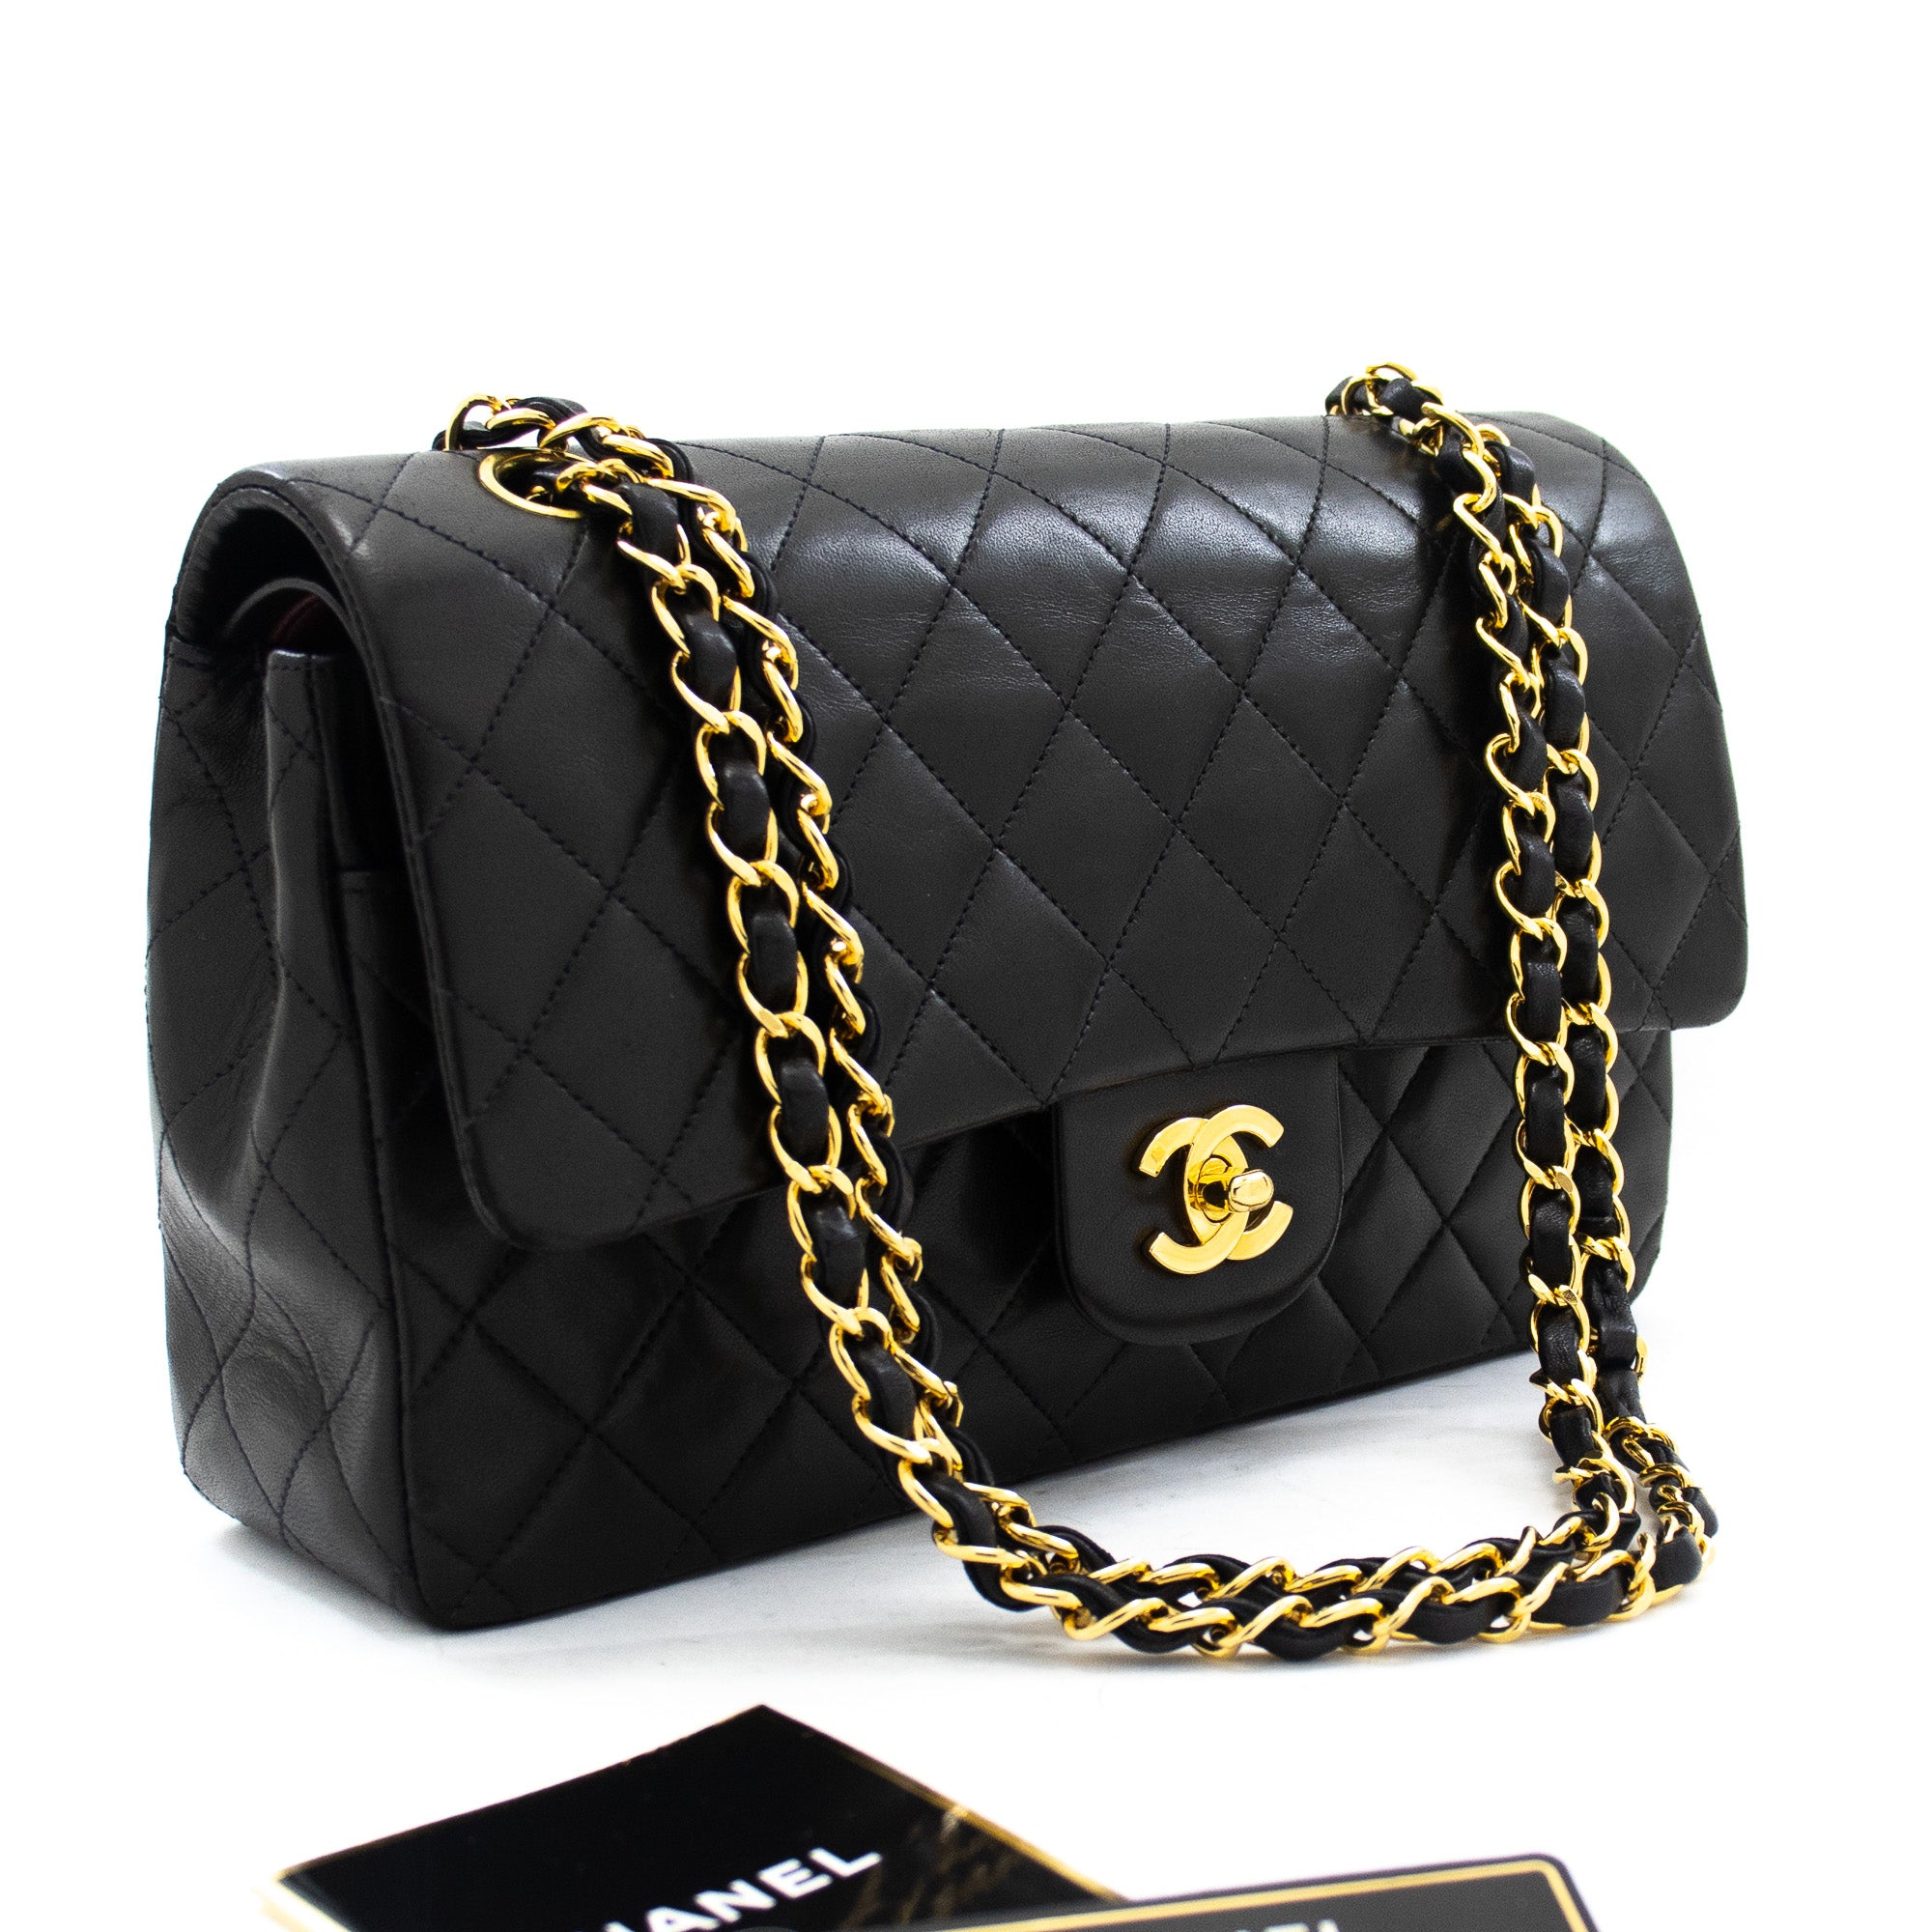 Chanel Maxi Shoulder Flap Bag Black Lambskin